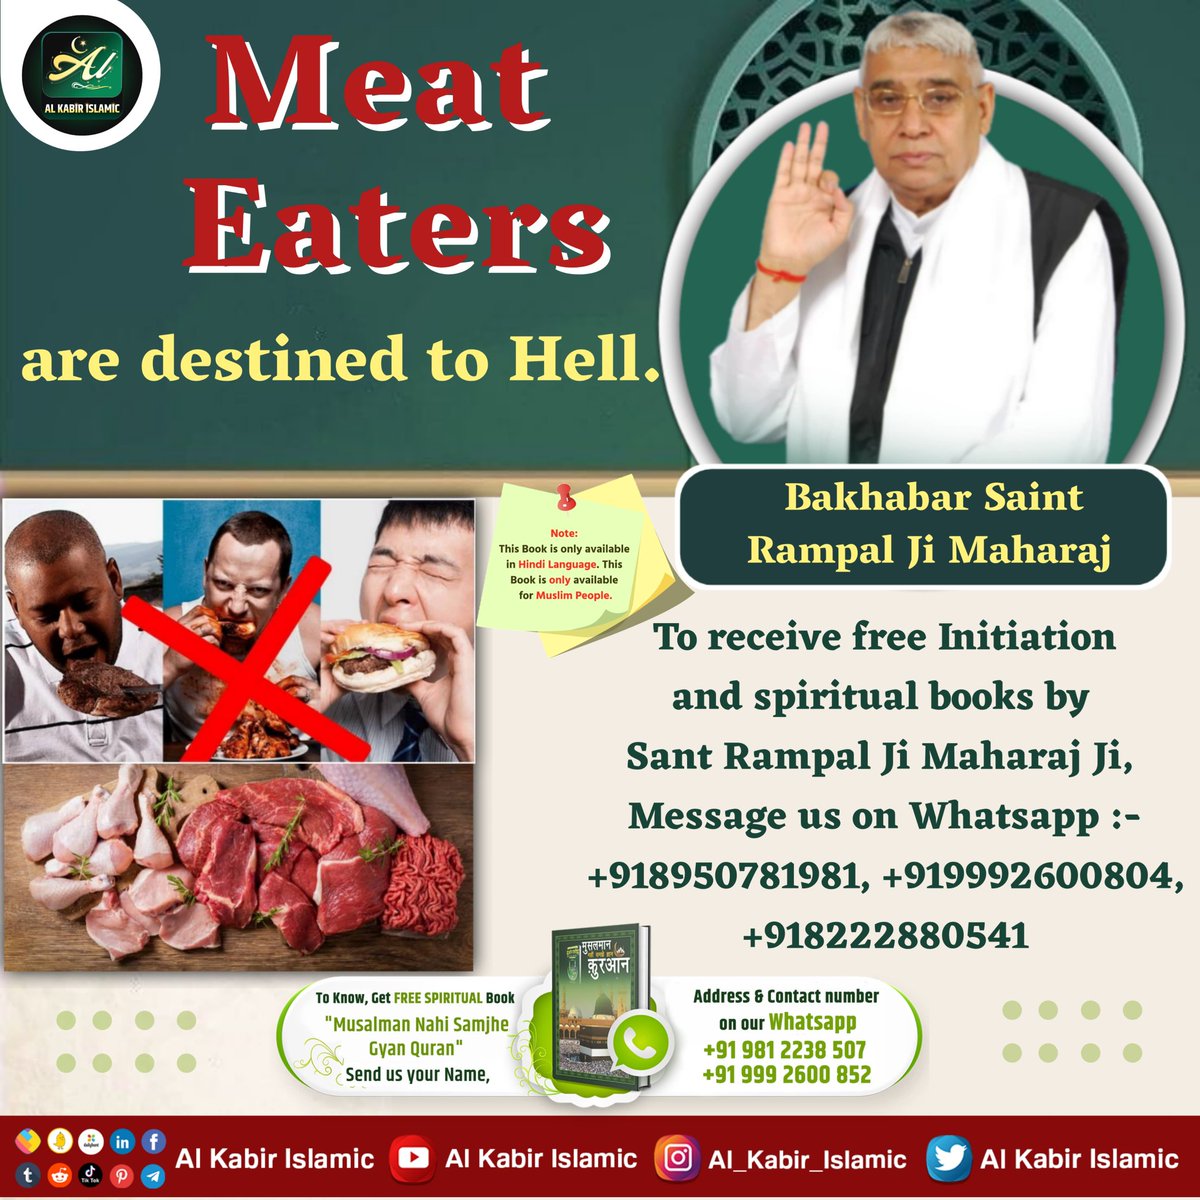 #GodMorningThrusday
STOP EATING MEAT!
Meat Eaters are destined to hell.
#AlKabir_Islamic
#SaintRampalJi